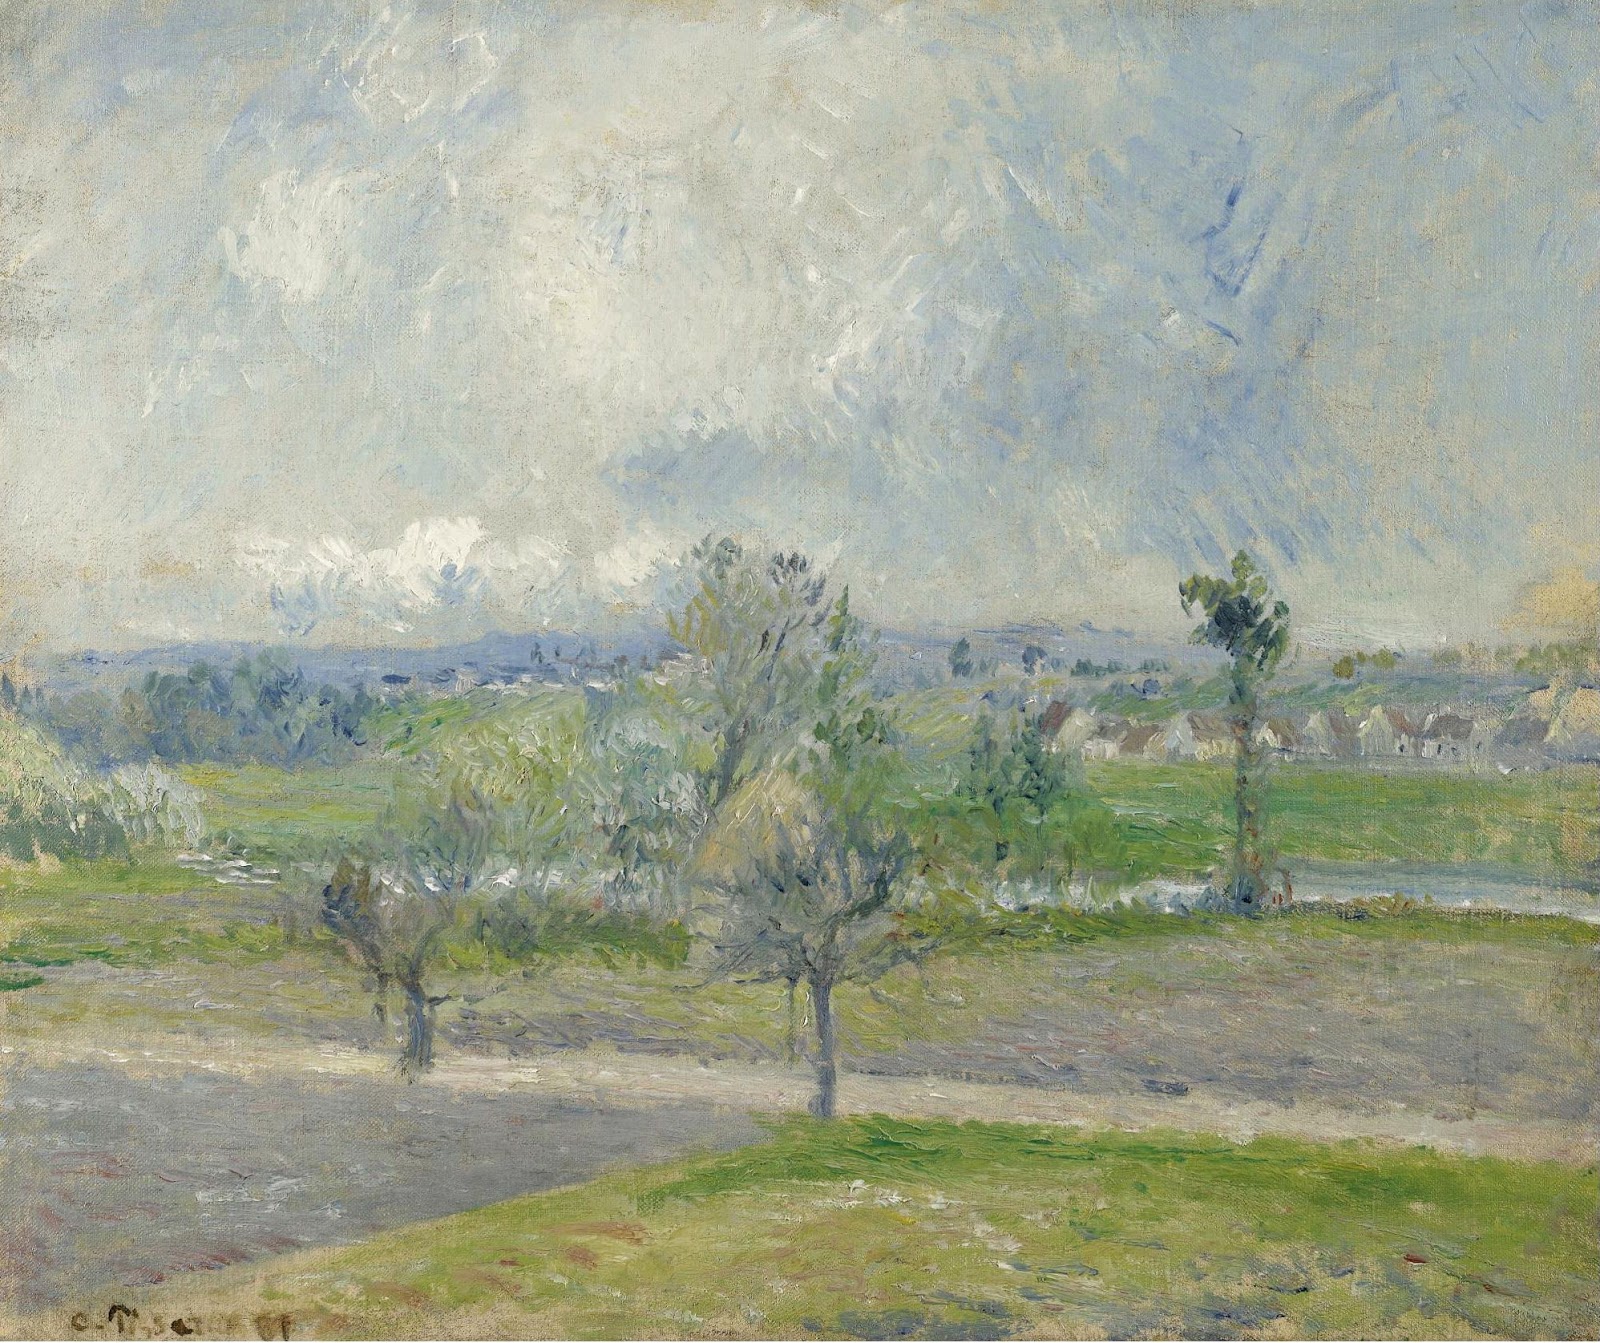 Camille+Pissarro-1830-1903 (403).jpg